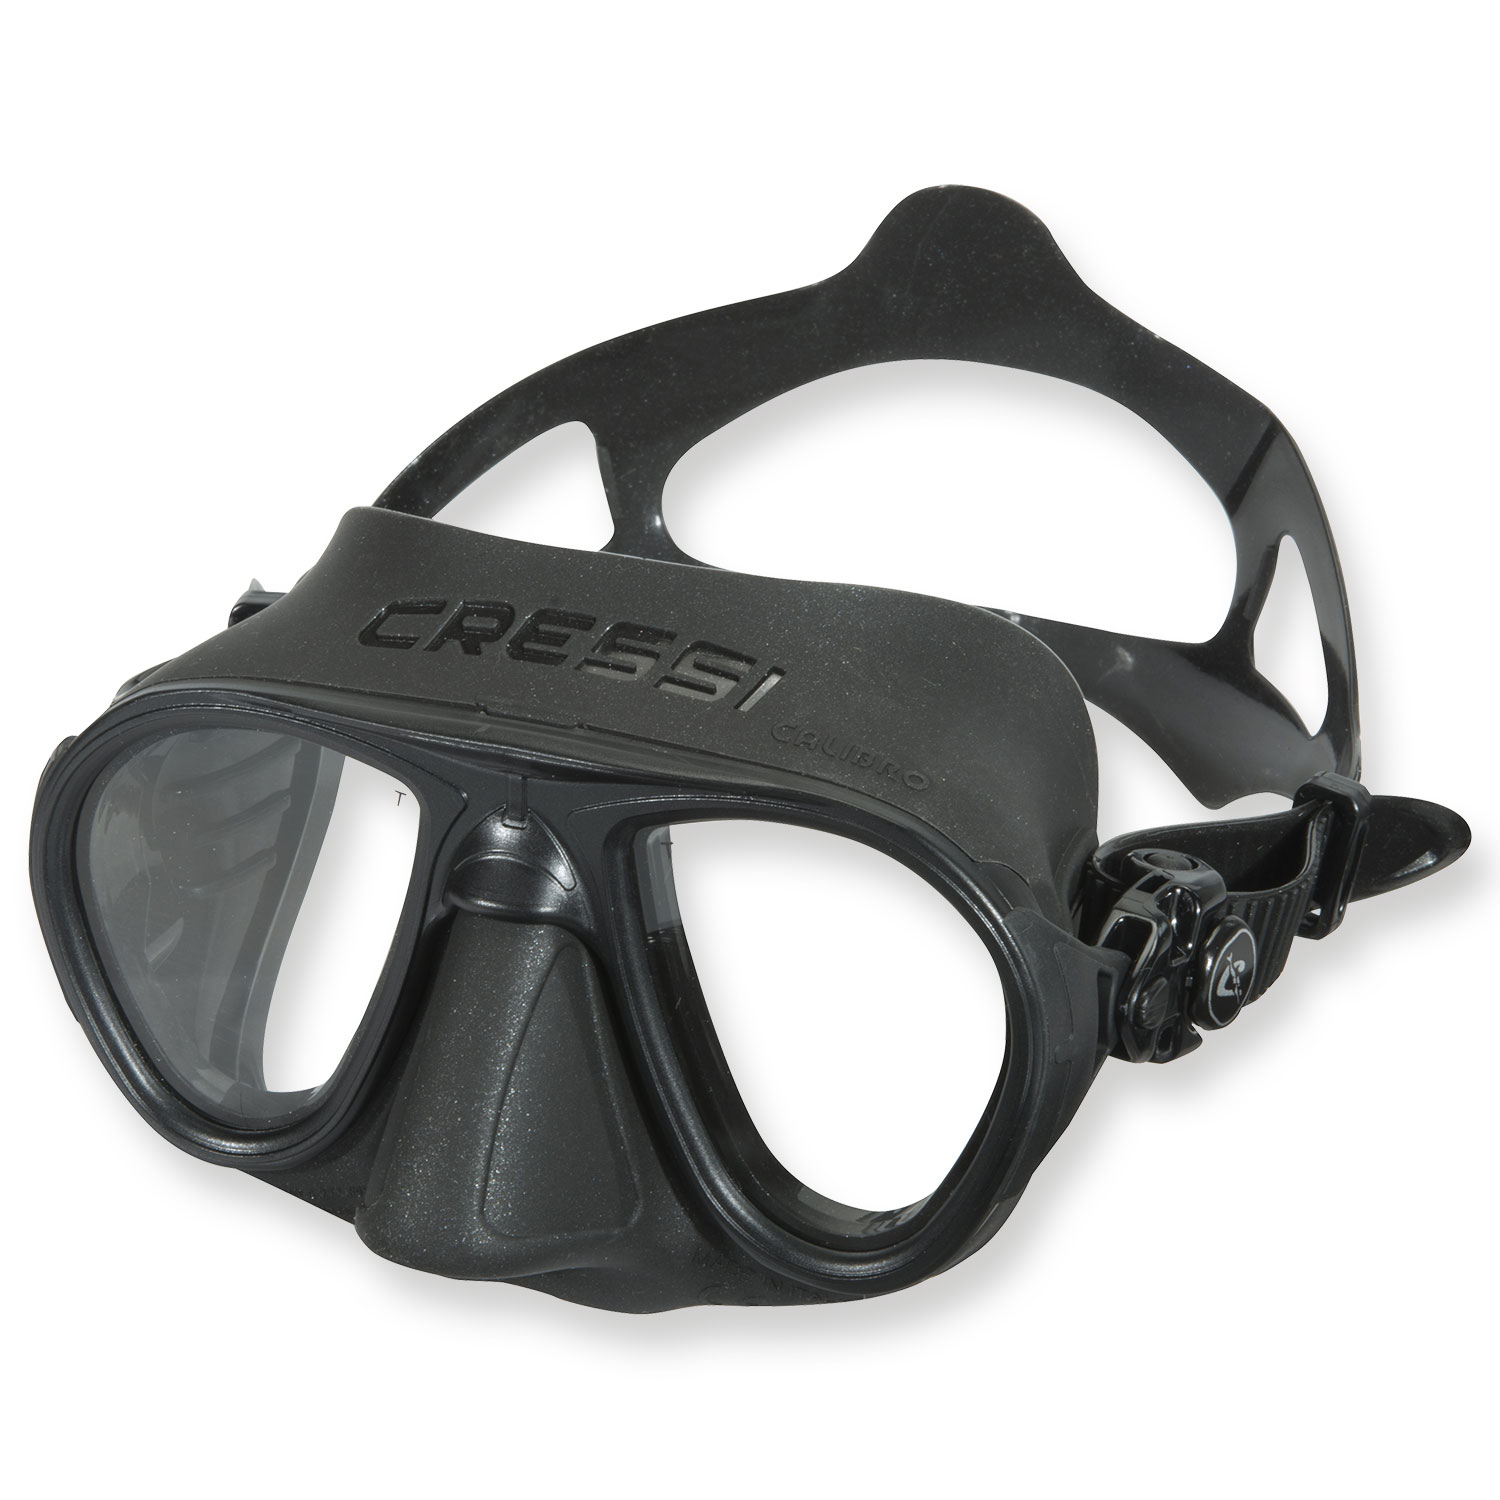 Cressi Maskenband Tauchmaske Maske transparent schwarz Silikon Halter Clip Niete 